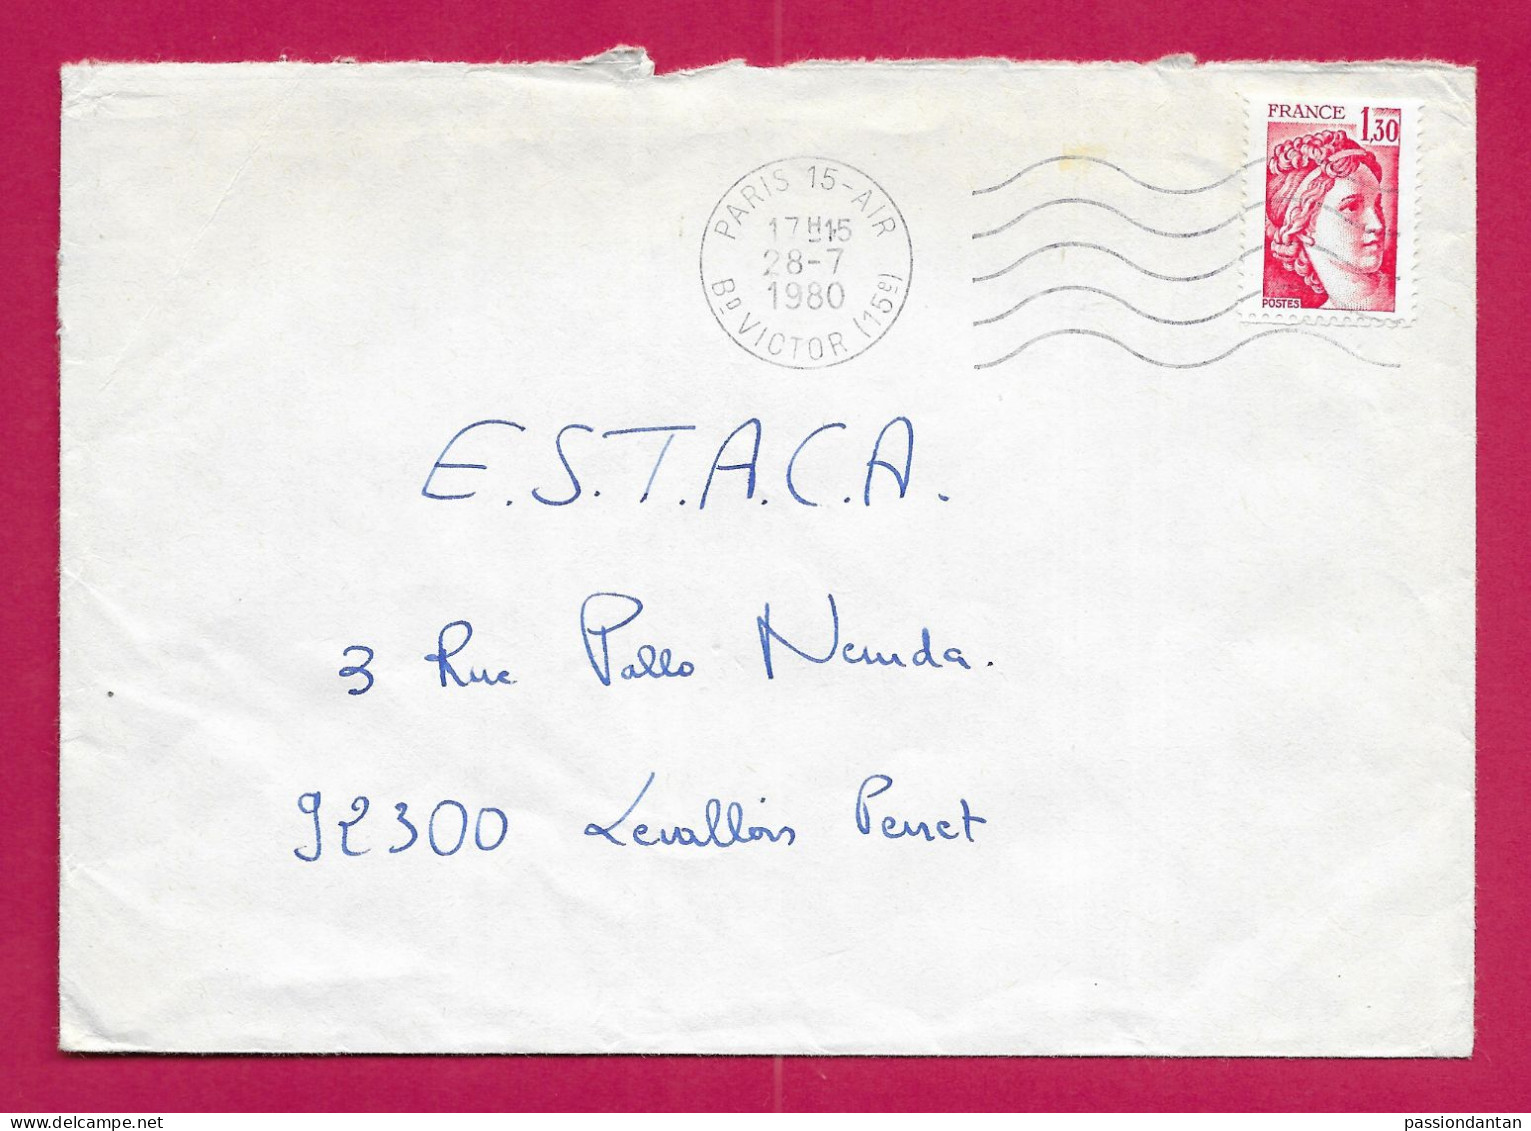 Enveloppe Datée Du 28 Juillet 1980 - Oblitération Paris 15 Air - Militärische Luftpost